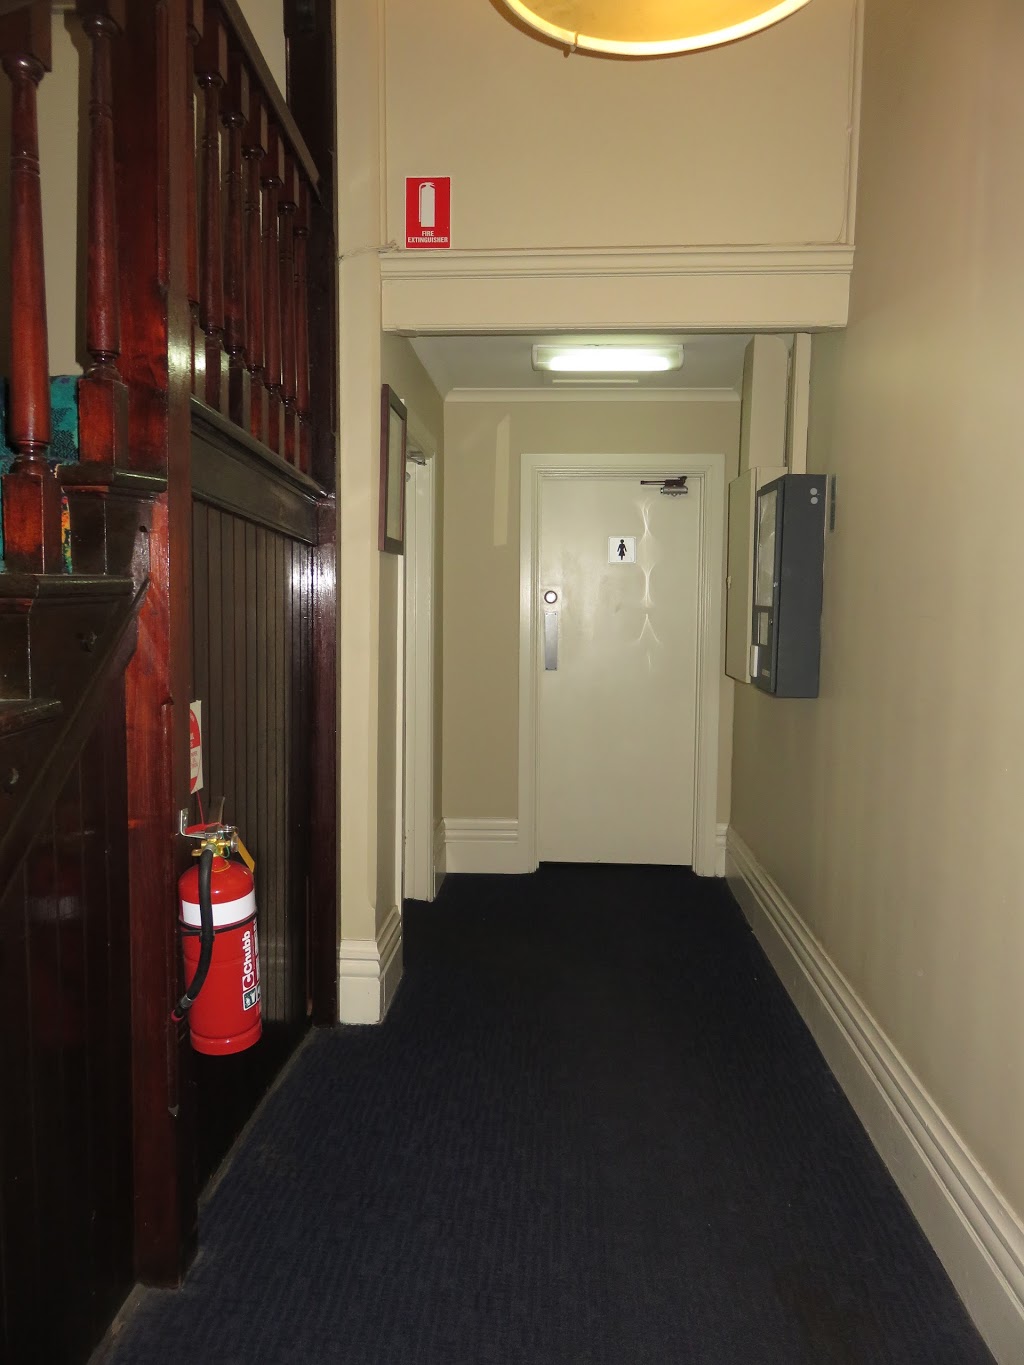 Portland Hotel | 286 Commercial Rd, Port Adelaide SA 5015, Australia | Phone: (08) 8447 4744